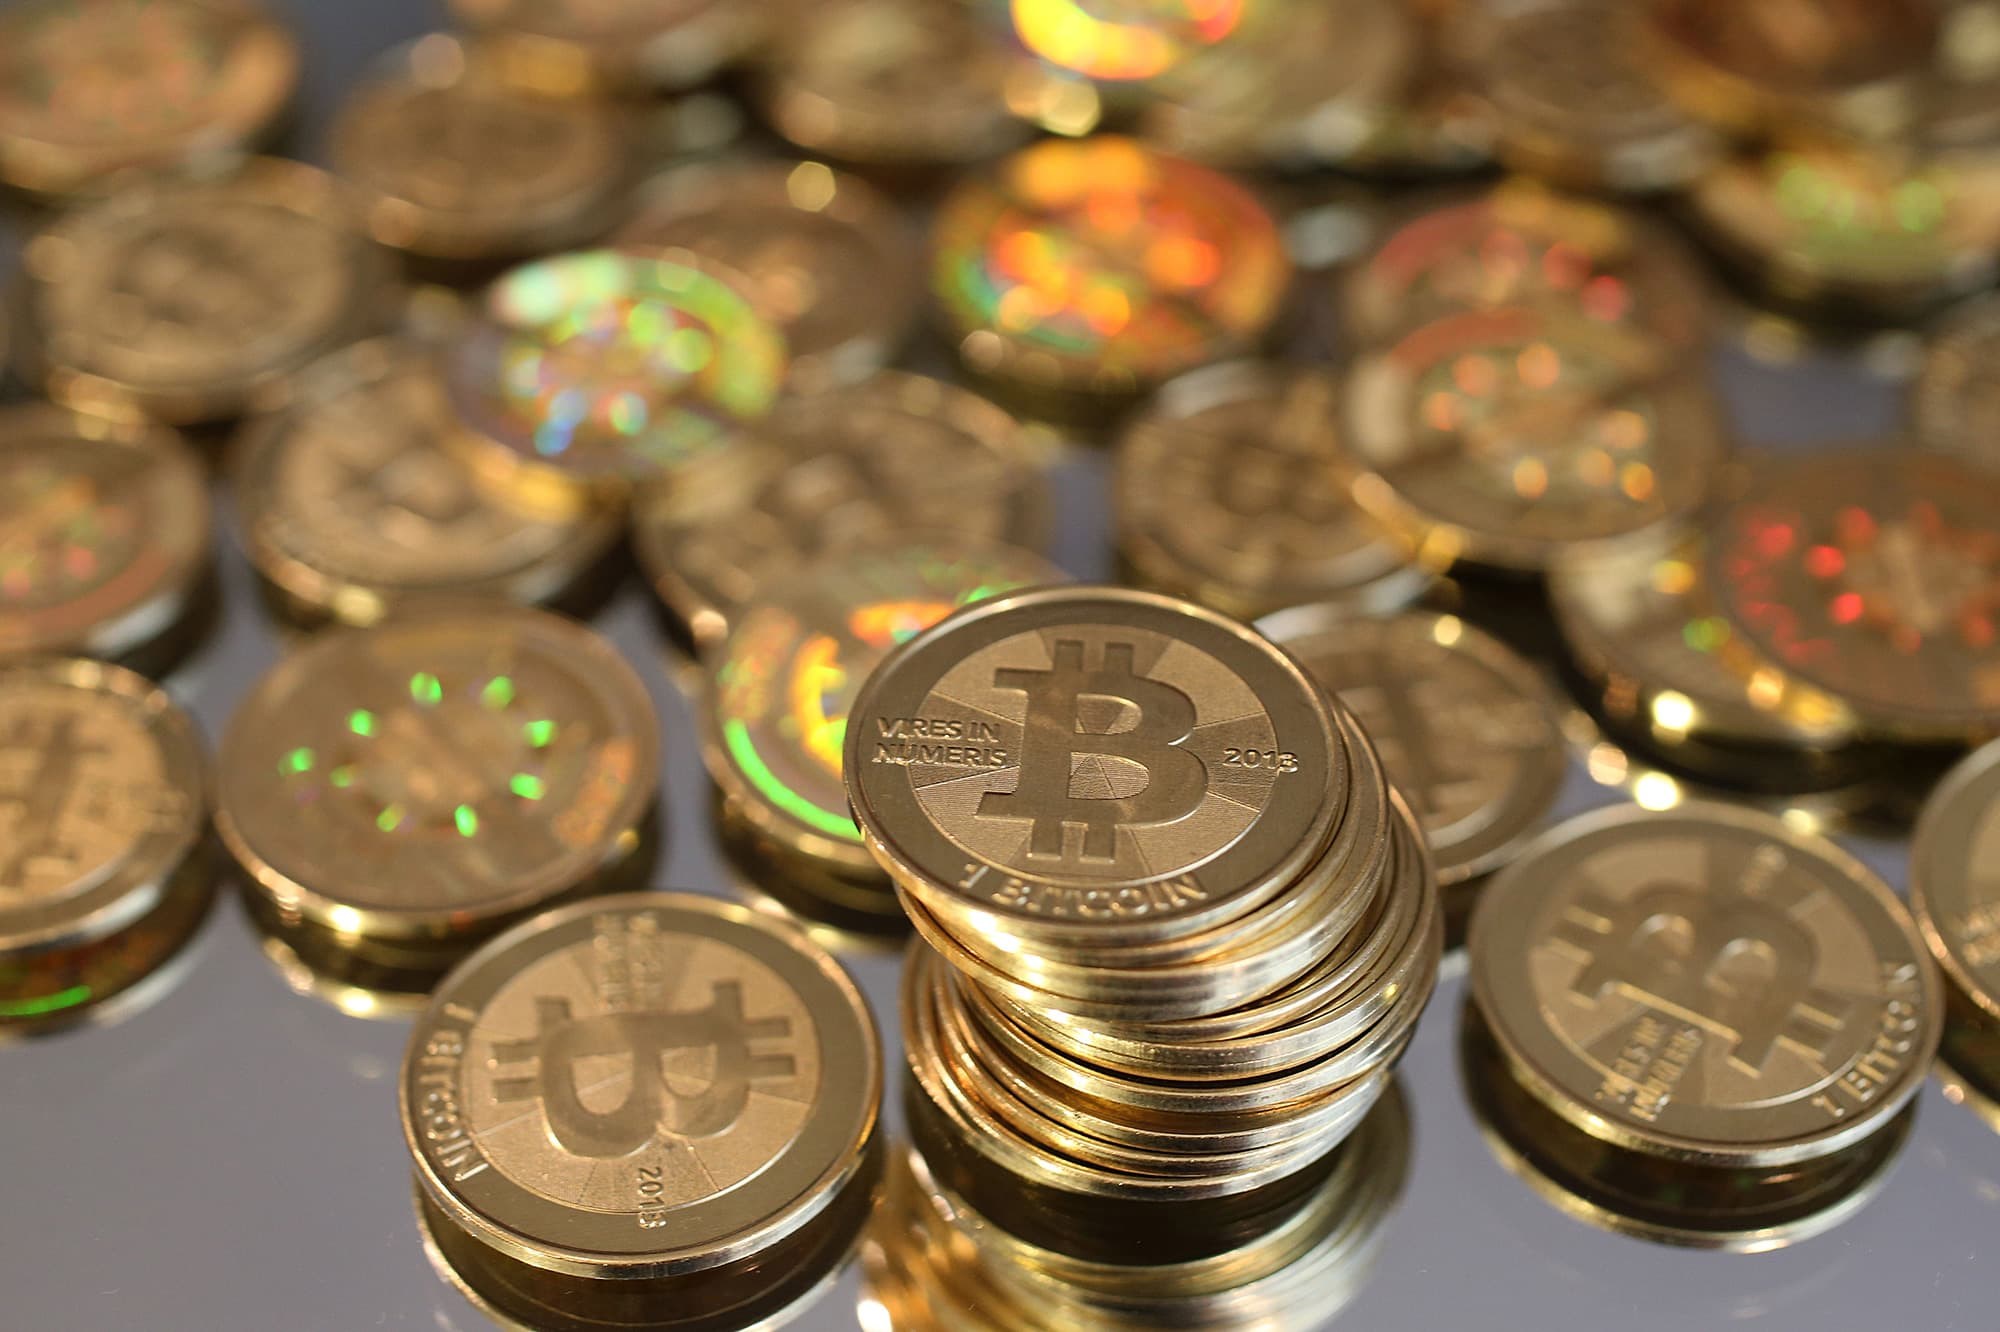 Marathon Digital 30.000 adet Bitcoin madencilik cihazı aldı